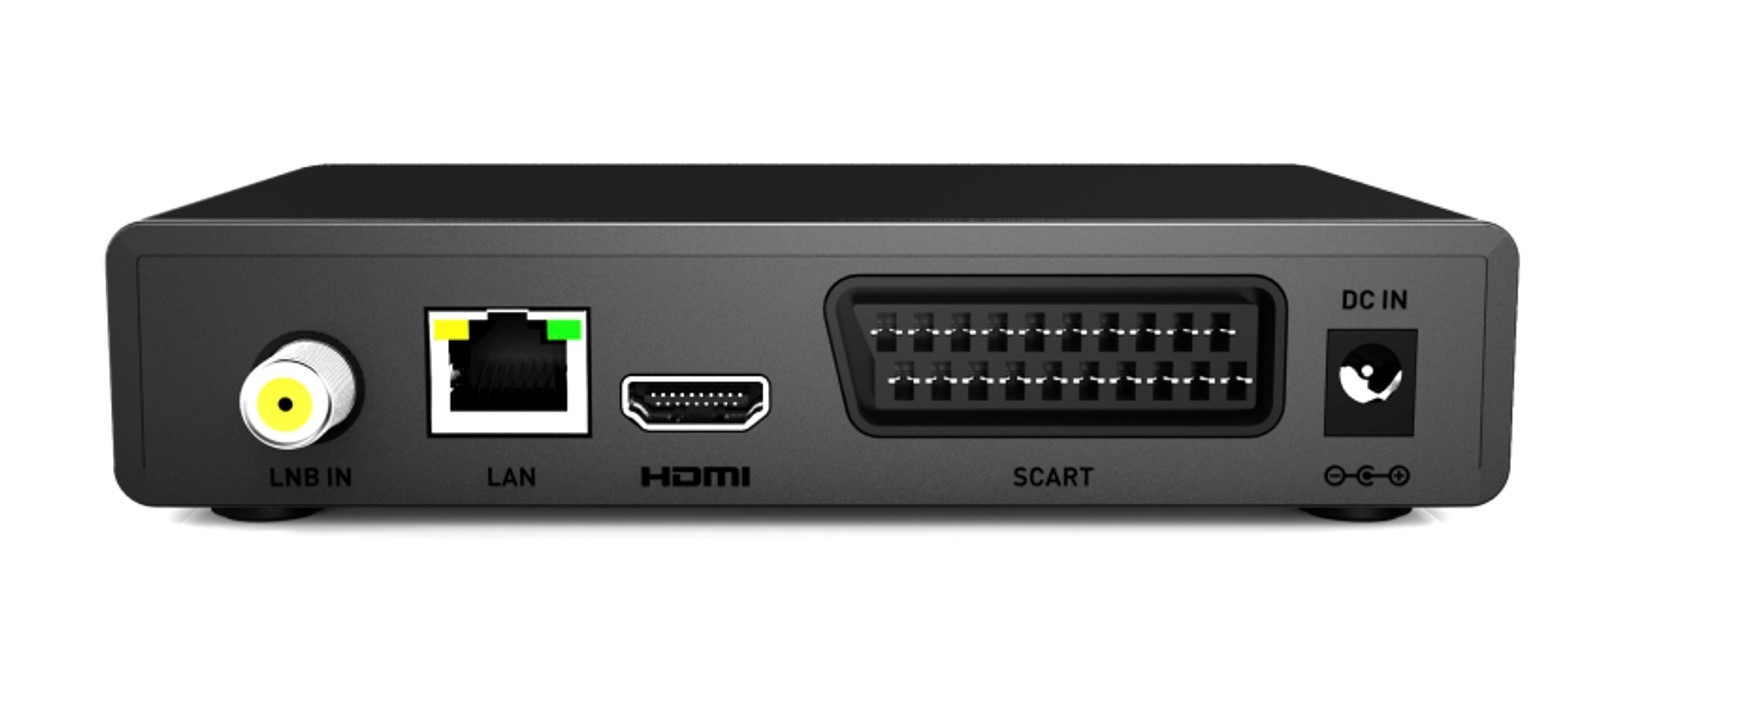 NeoViu (HDTV, HD-Sat S2 PHILIPS DVB-S, Receiver HD DVB-S2, Schwarz) DSR4022 Sat Receiver